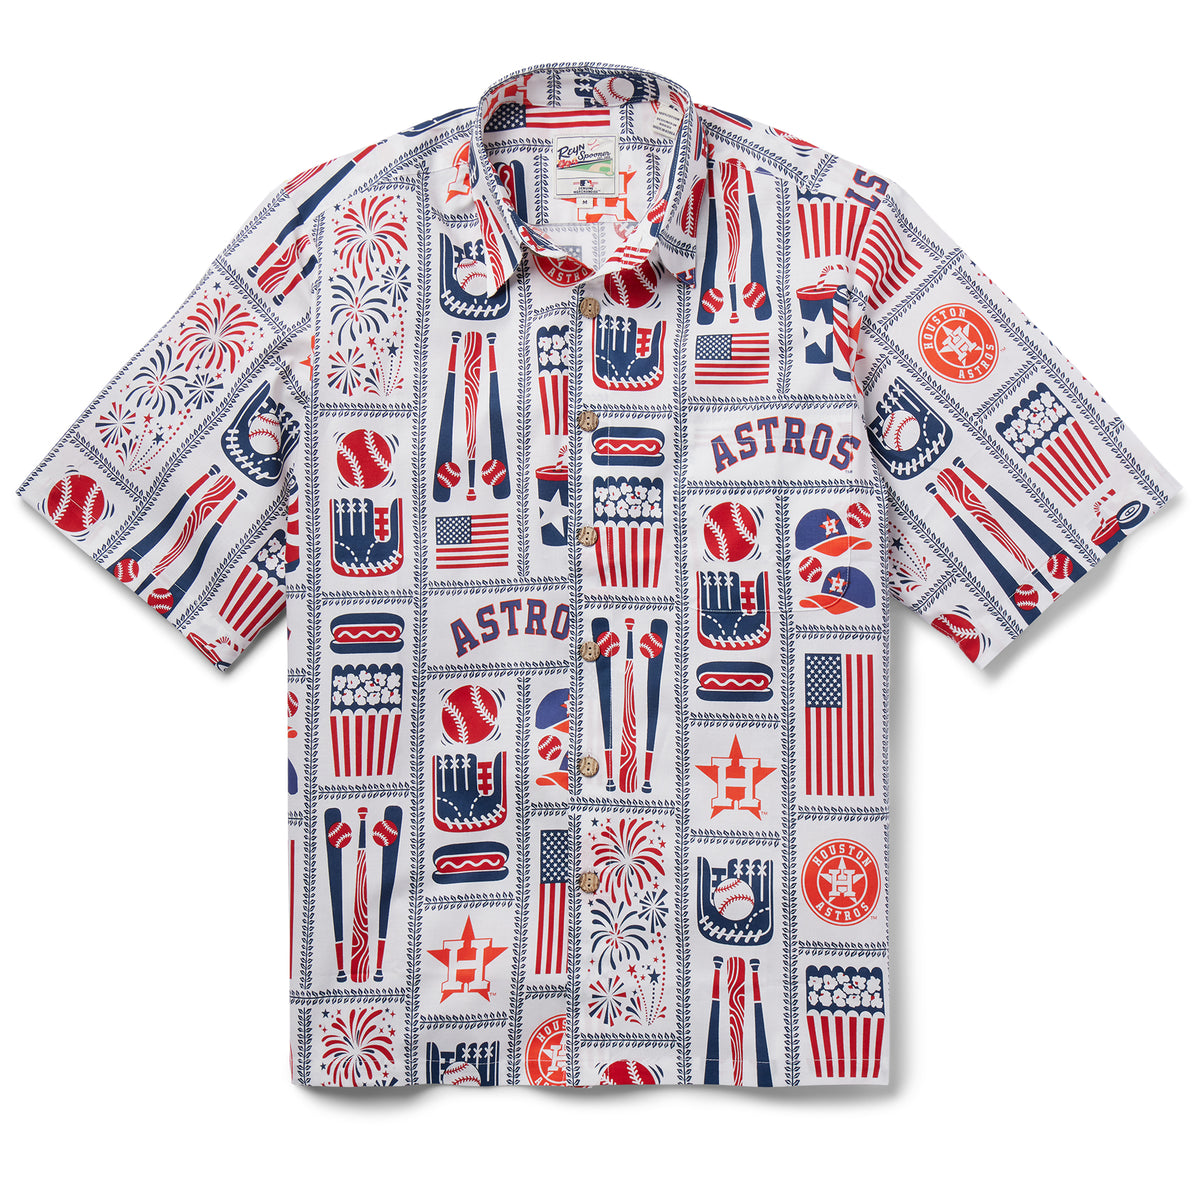 Houston Astros Reyn Spooner Aloha Button-Down Shirt - Navy